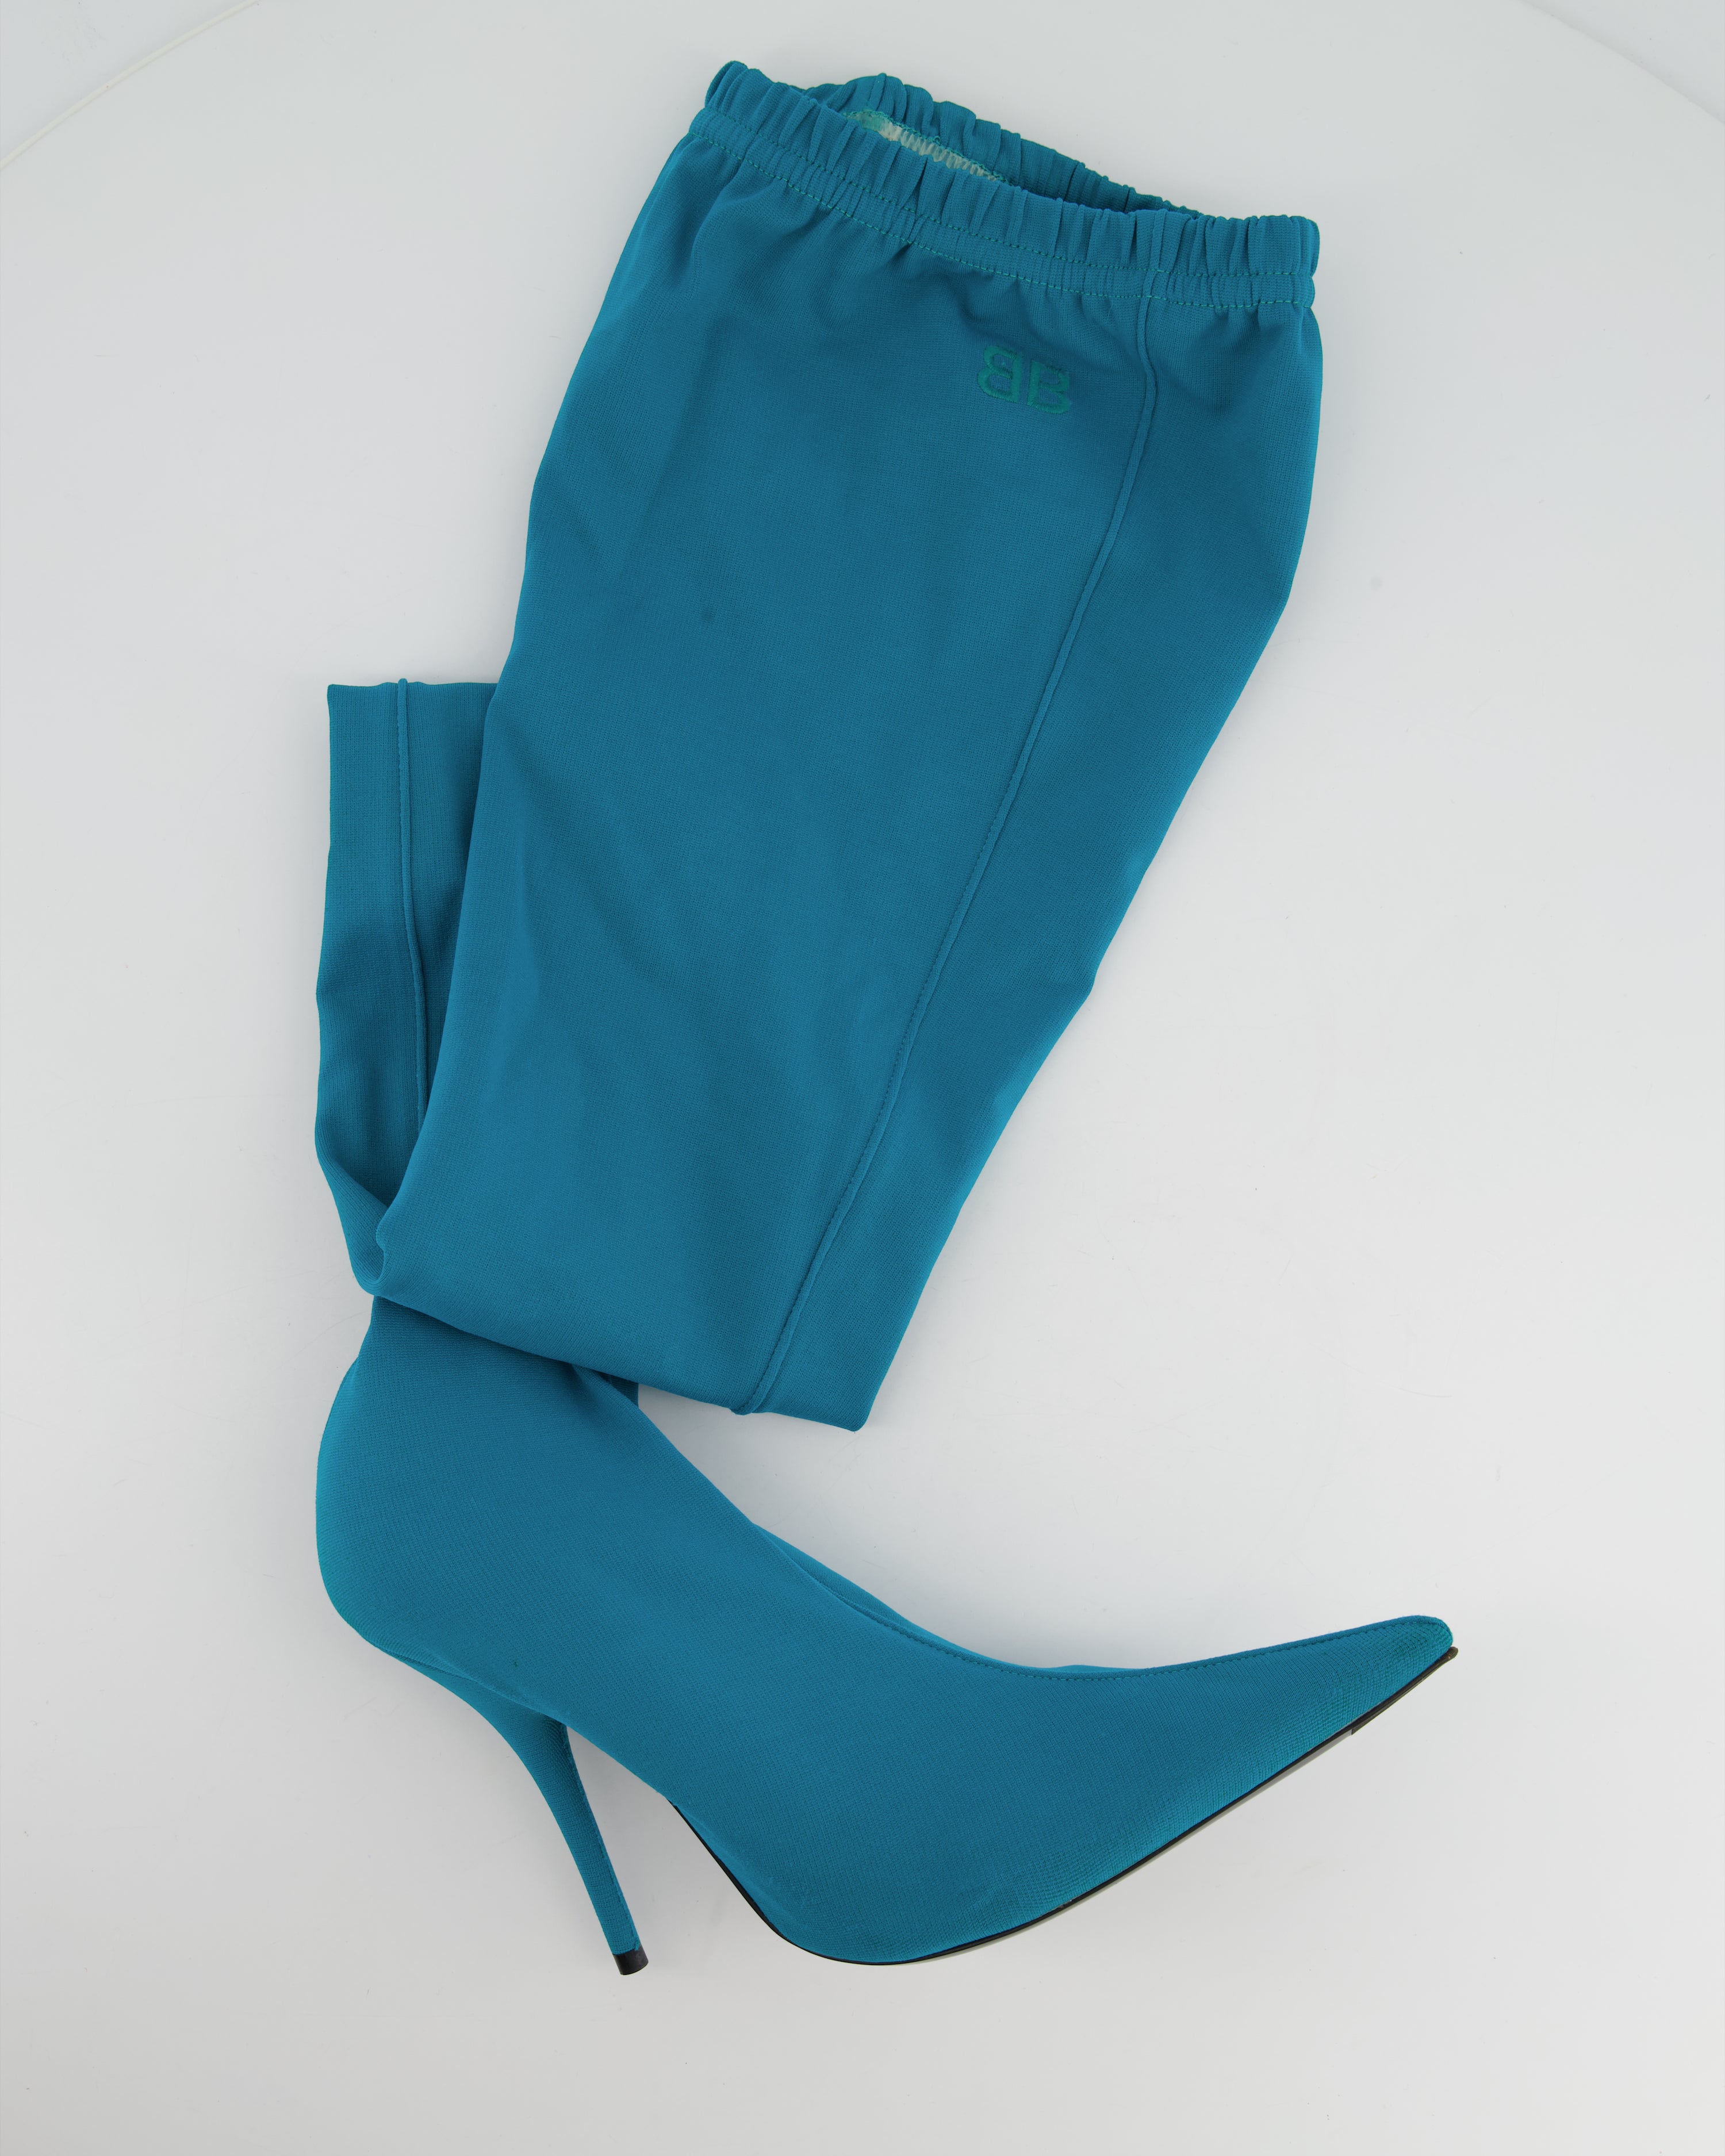 Balenciaga Women's Knife Over-The-Knee Boots